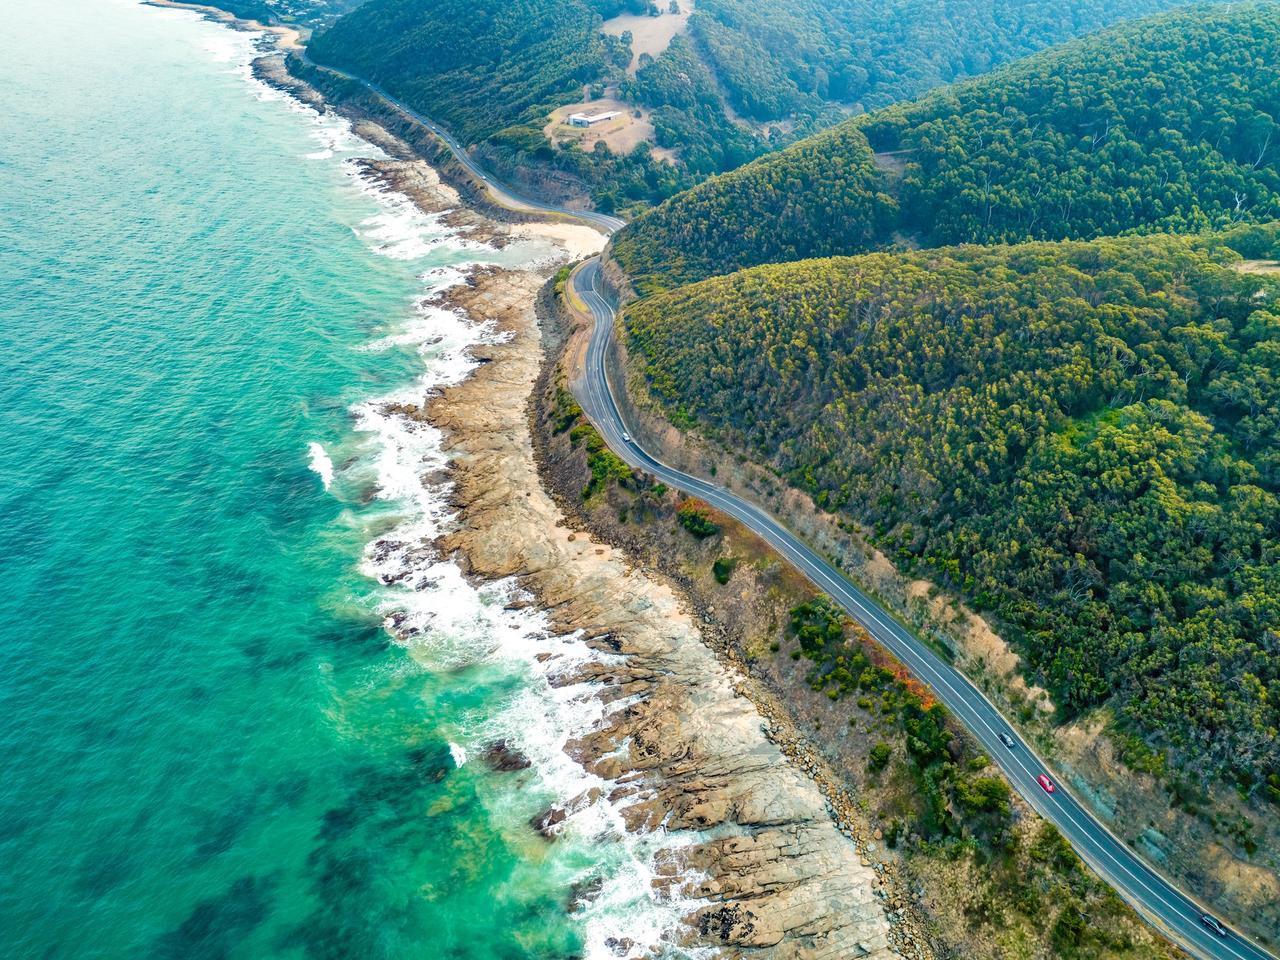 Aerial shot of Great Ocean Road in Australia